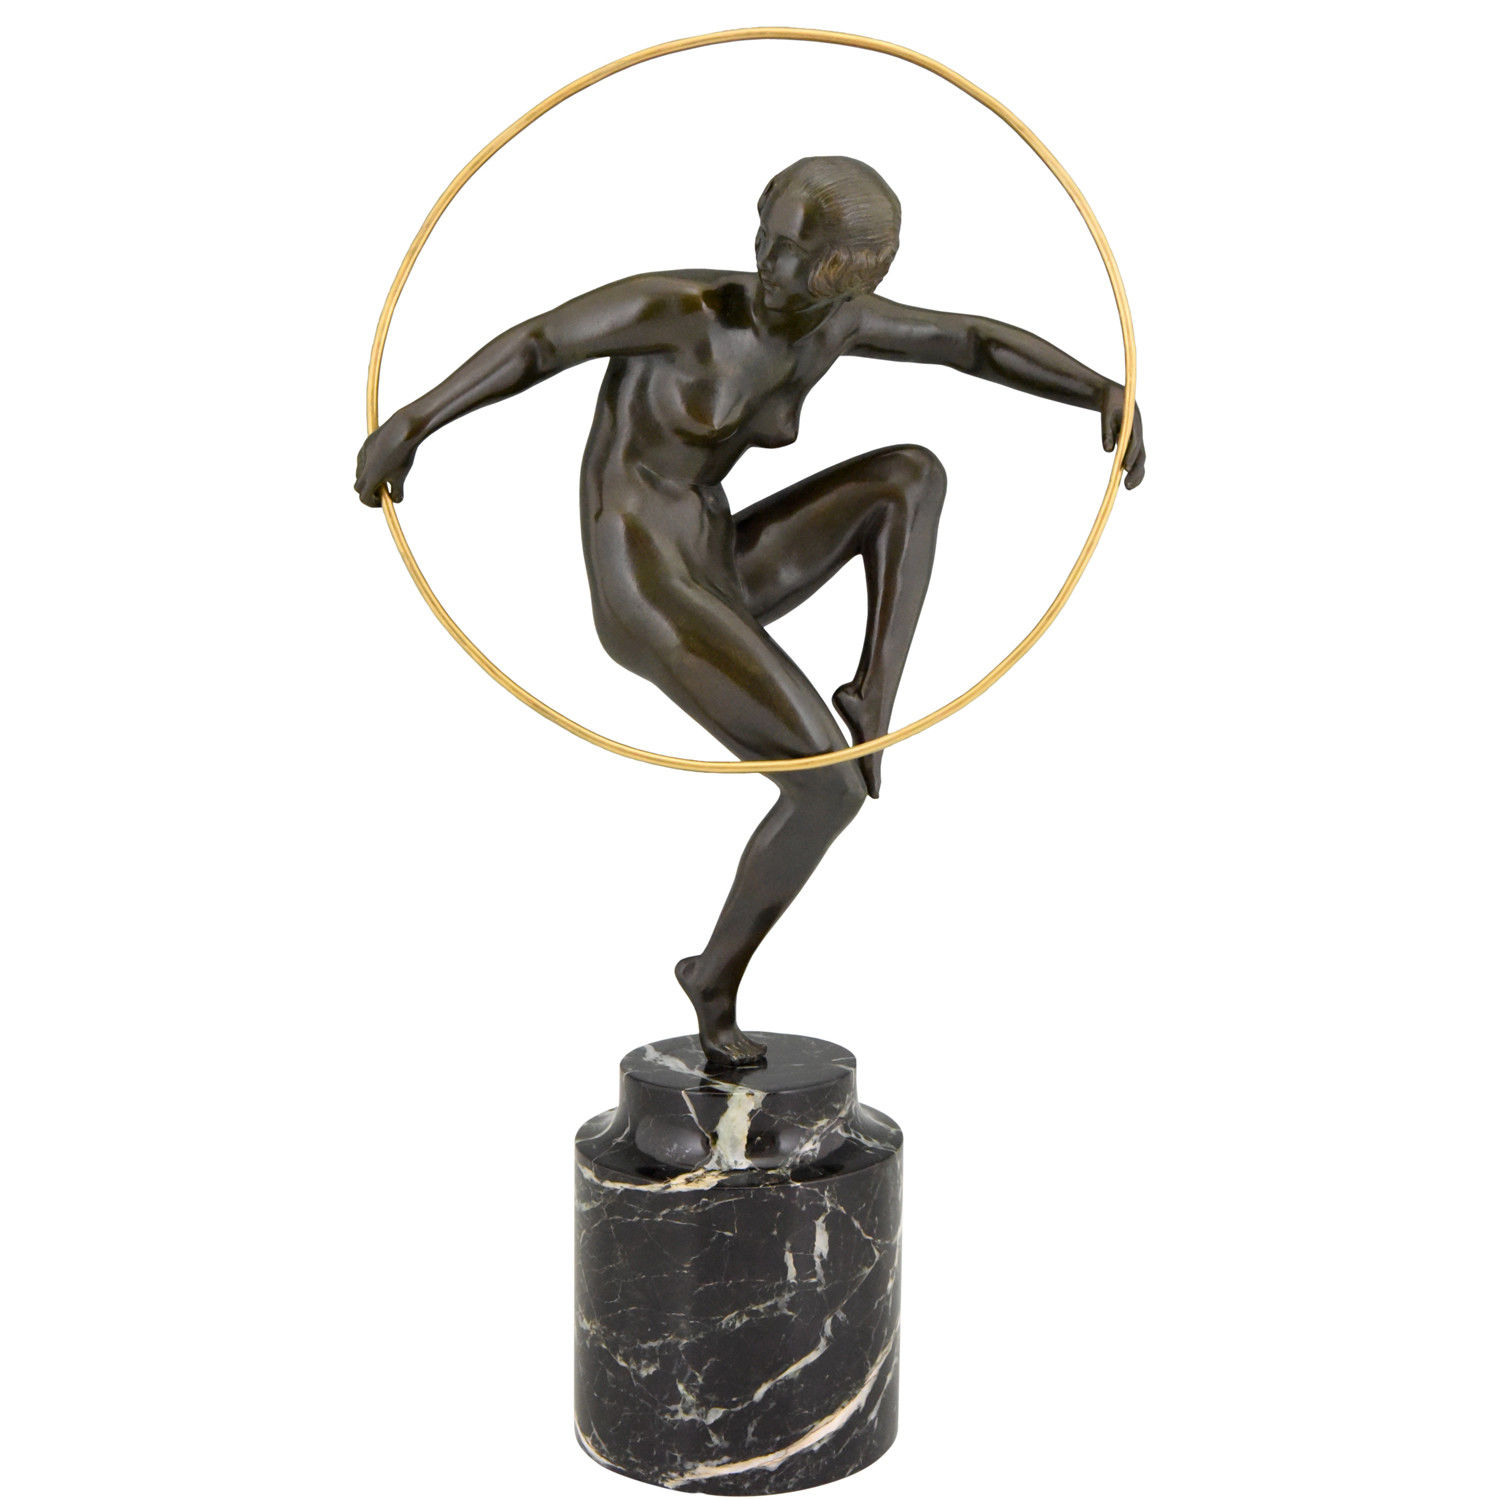 Art Deco sculpure 'Nude Hoop Dancer' by Andre Marcel Bouraine (Briand), c.a. 1925, by gallery 'Het Ware Huis'